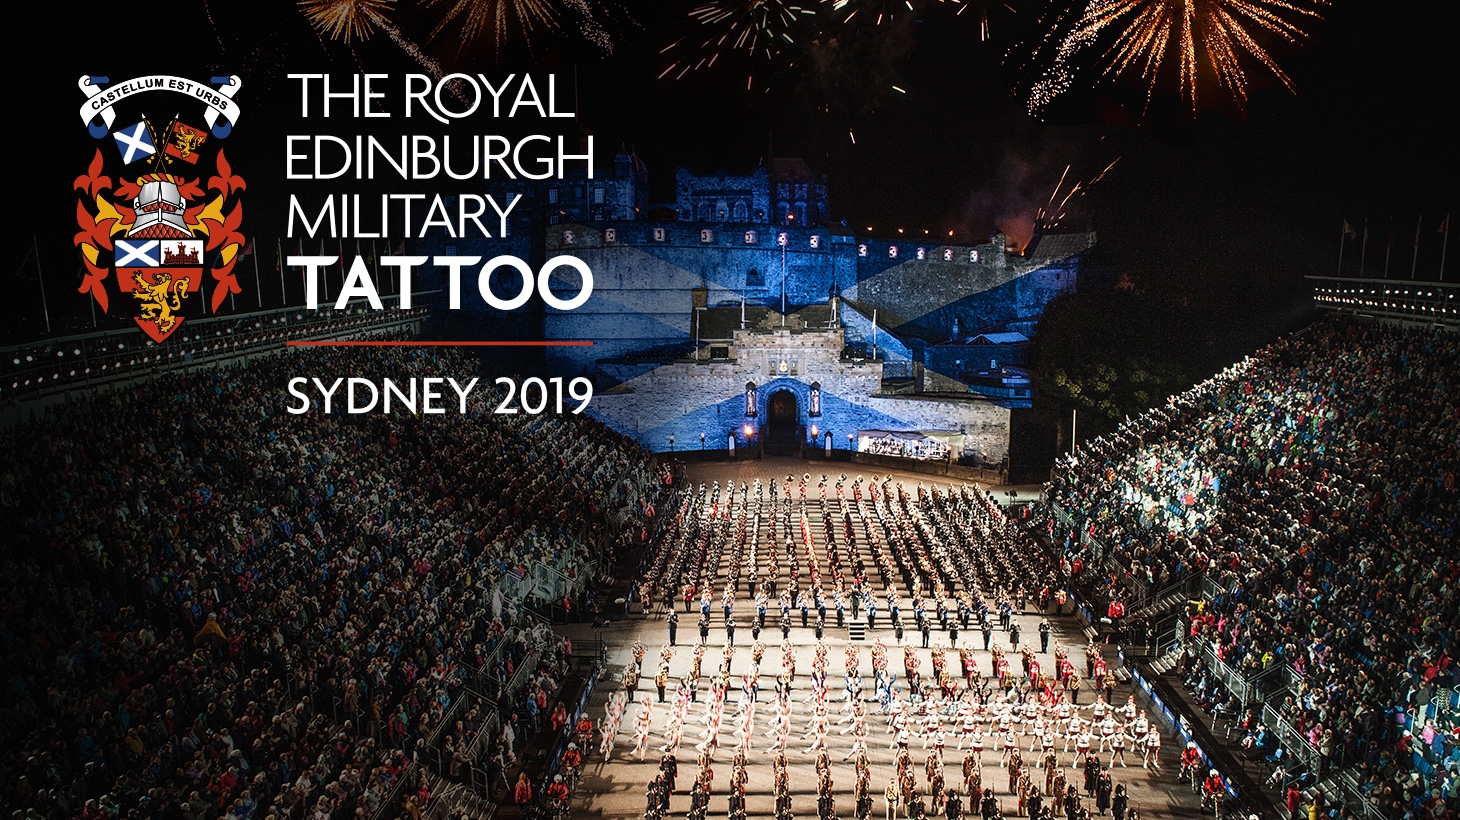 Edinburgh Tattoo Sydney 2019 Ticket Prices Wiki Tattoo